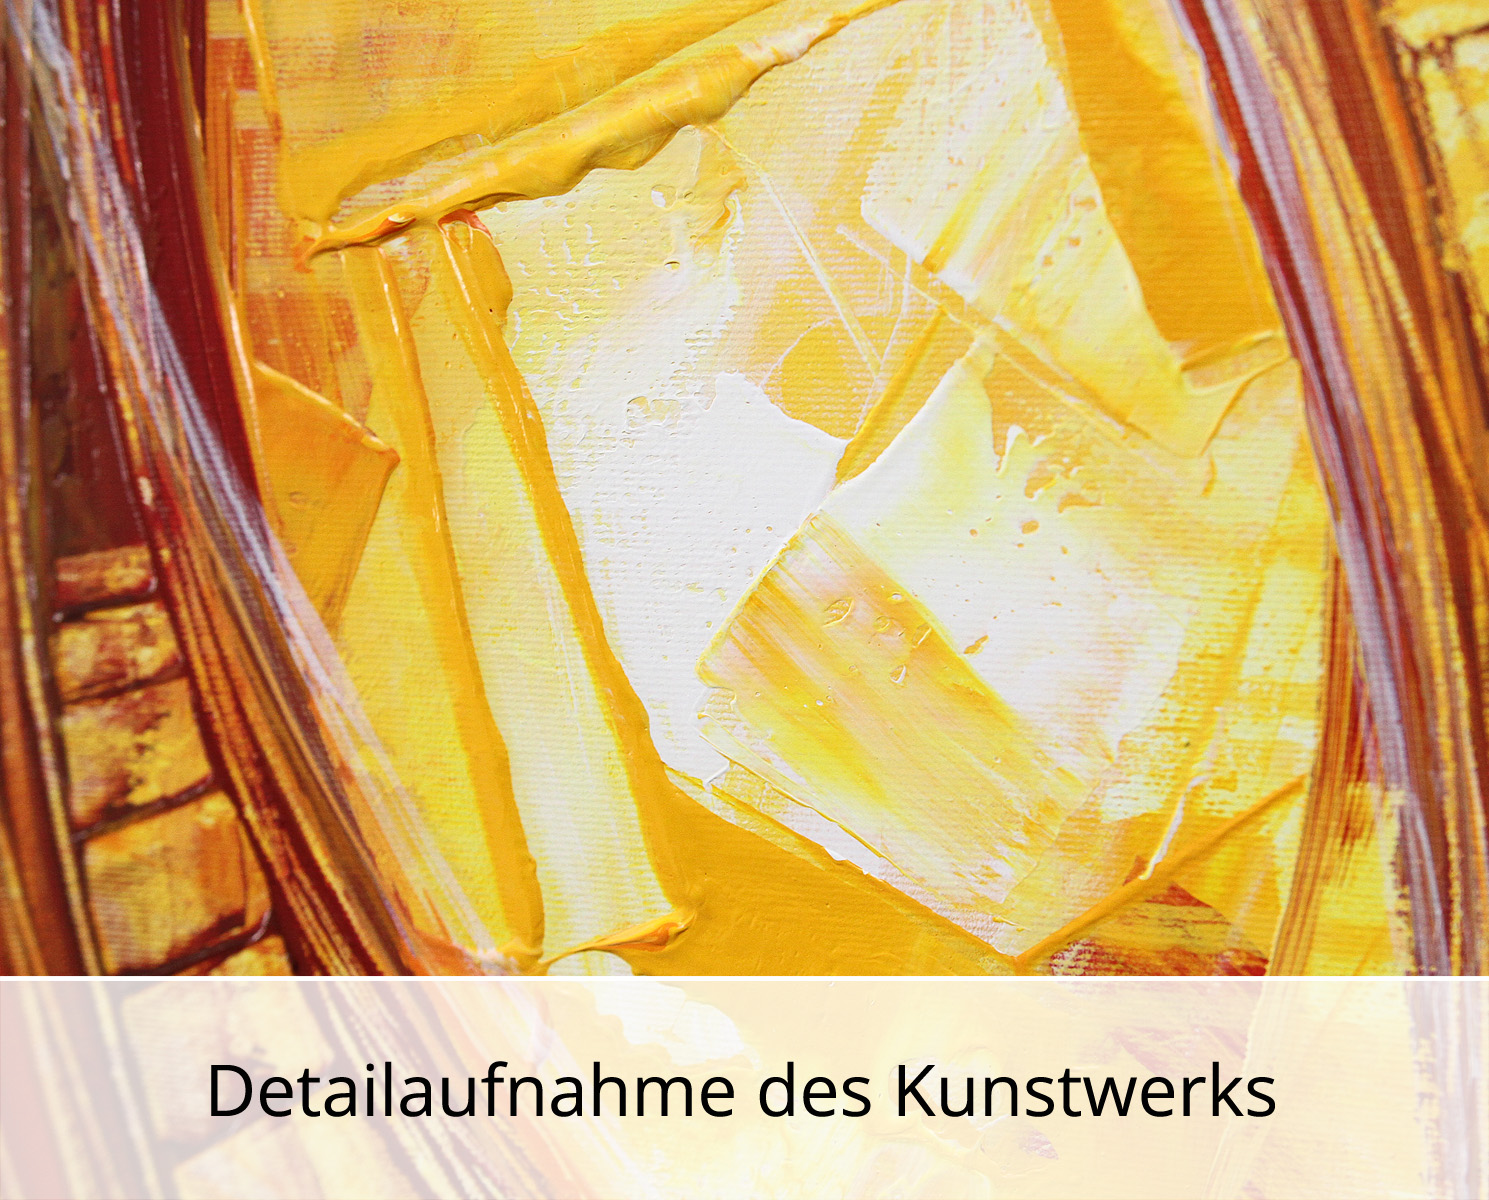 R. König: "Kristallfeuer VIII", mehrteilige Acrylbilder, Originalgemälde (Unikat)